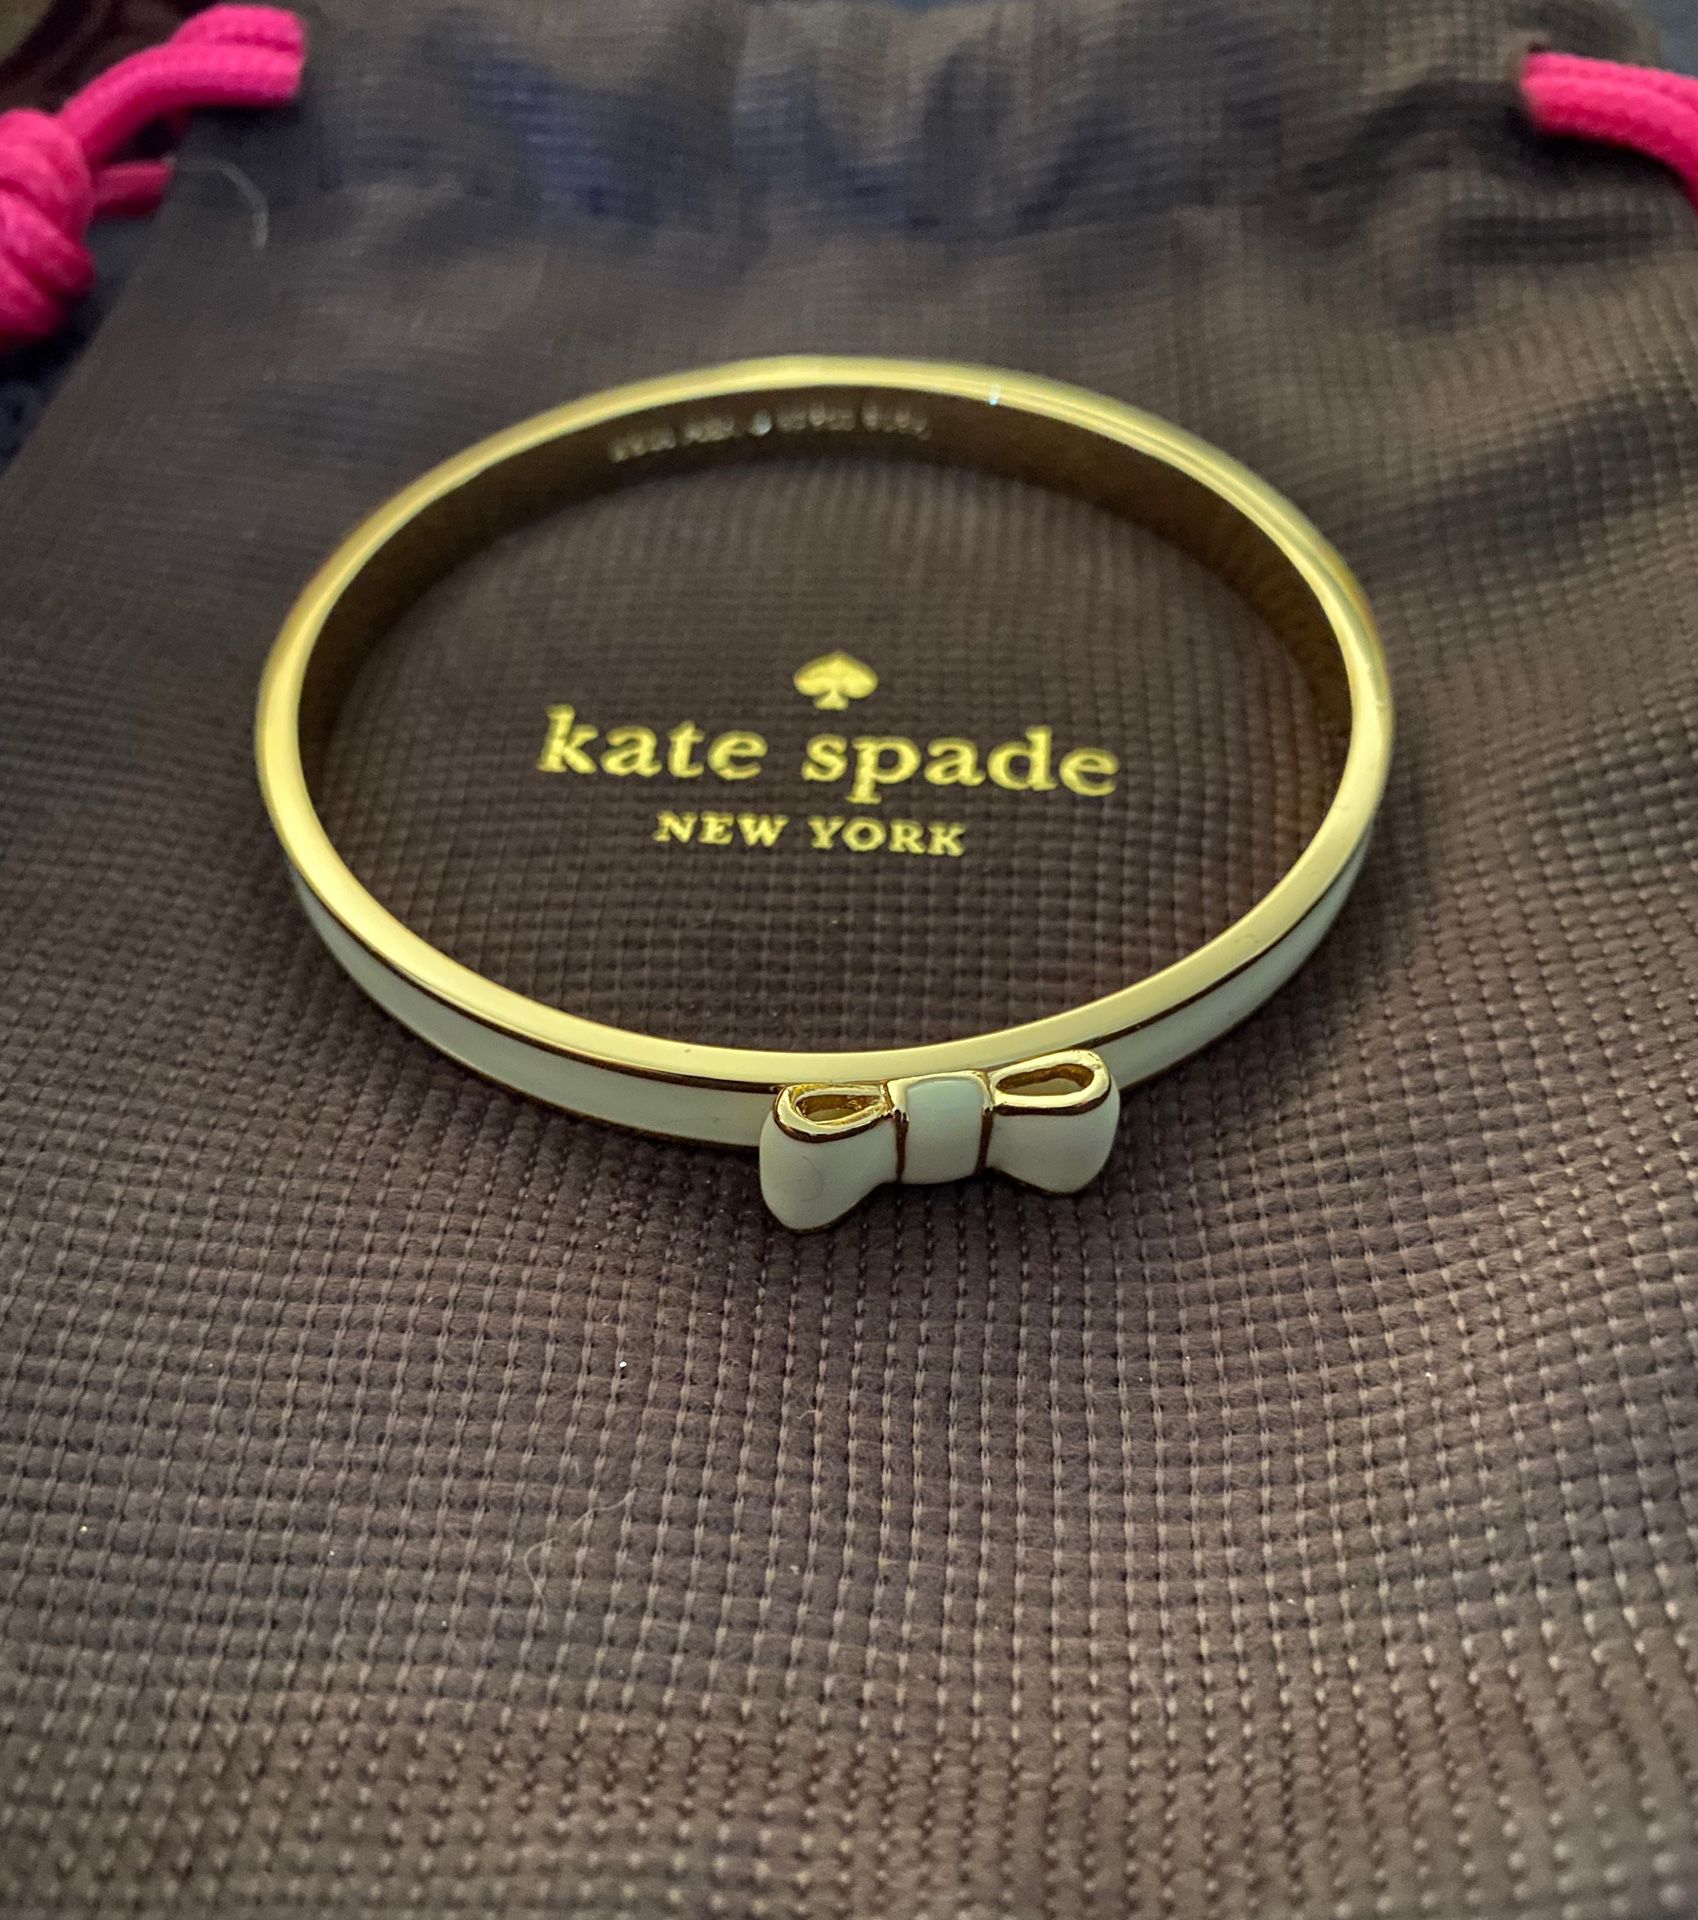 Kate spade jewelry set